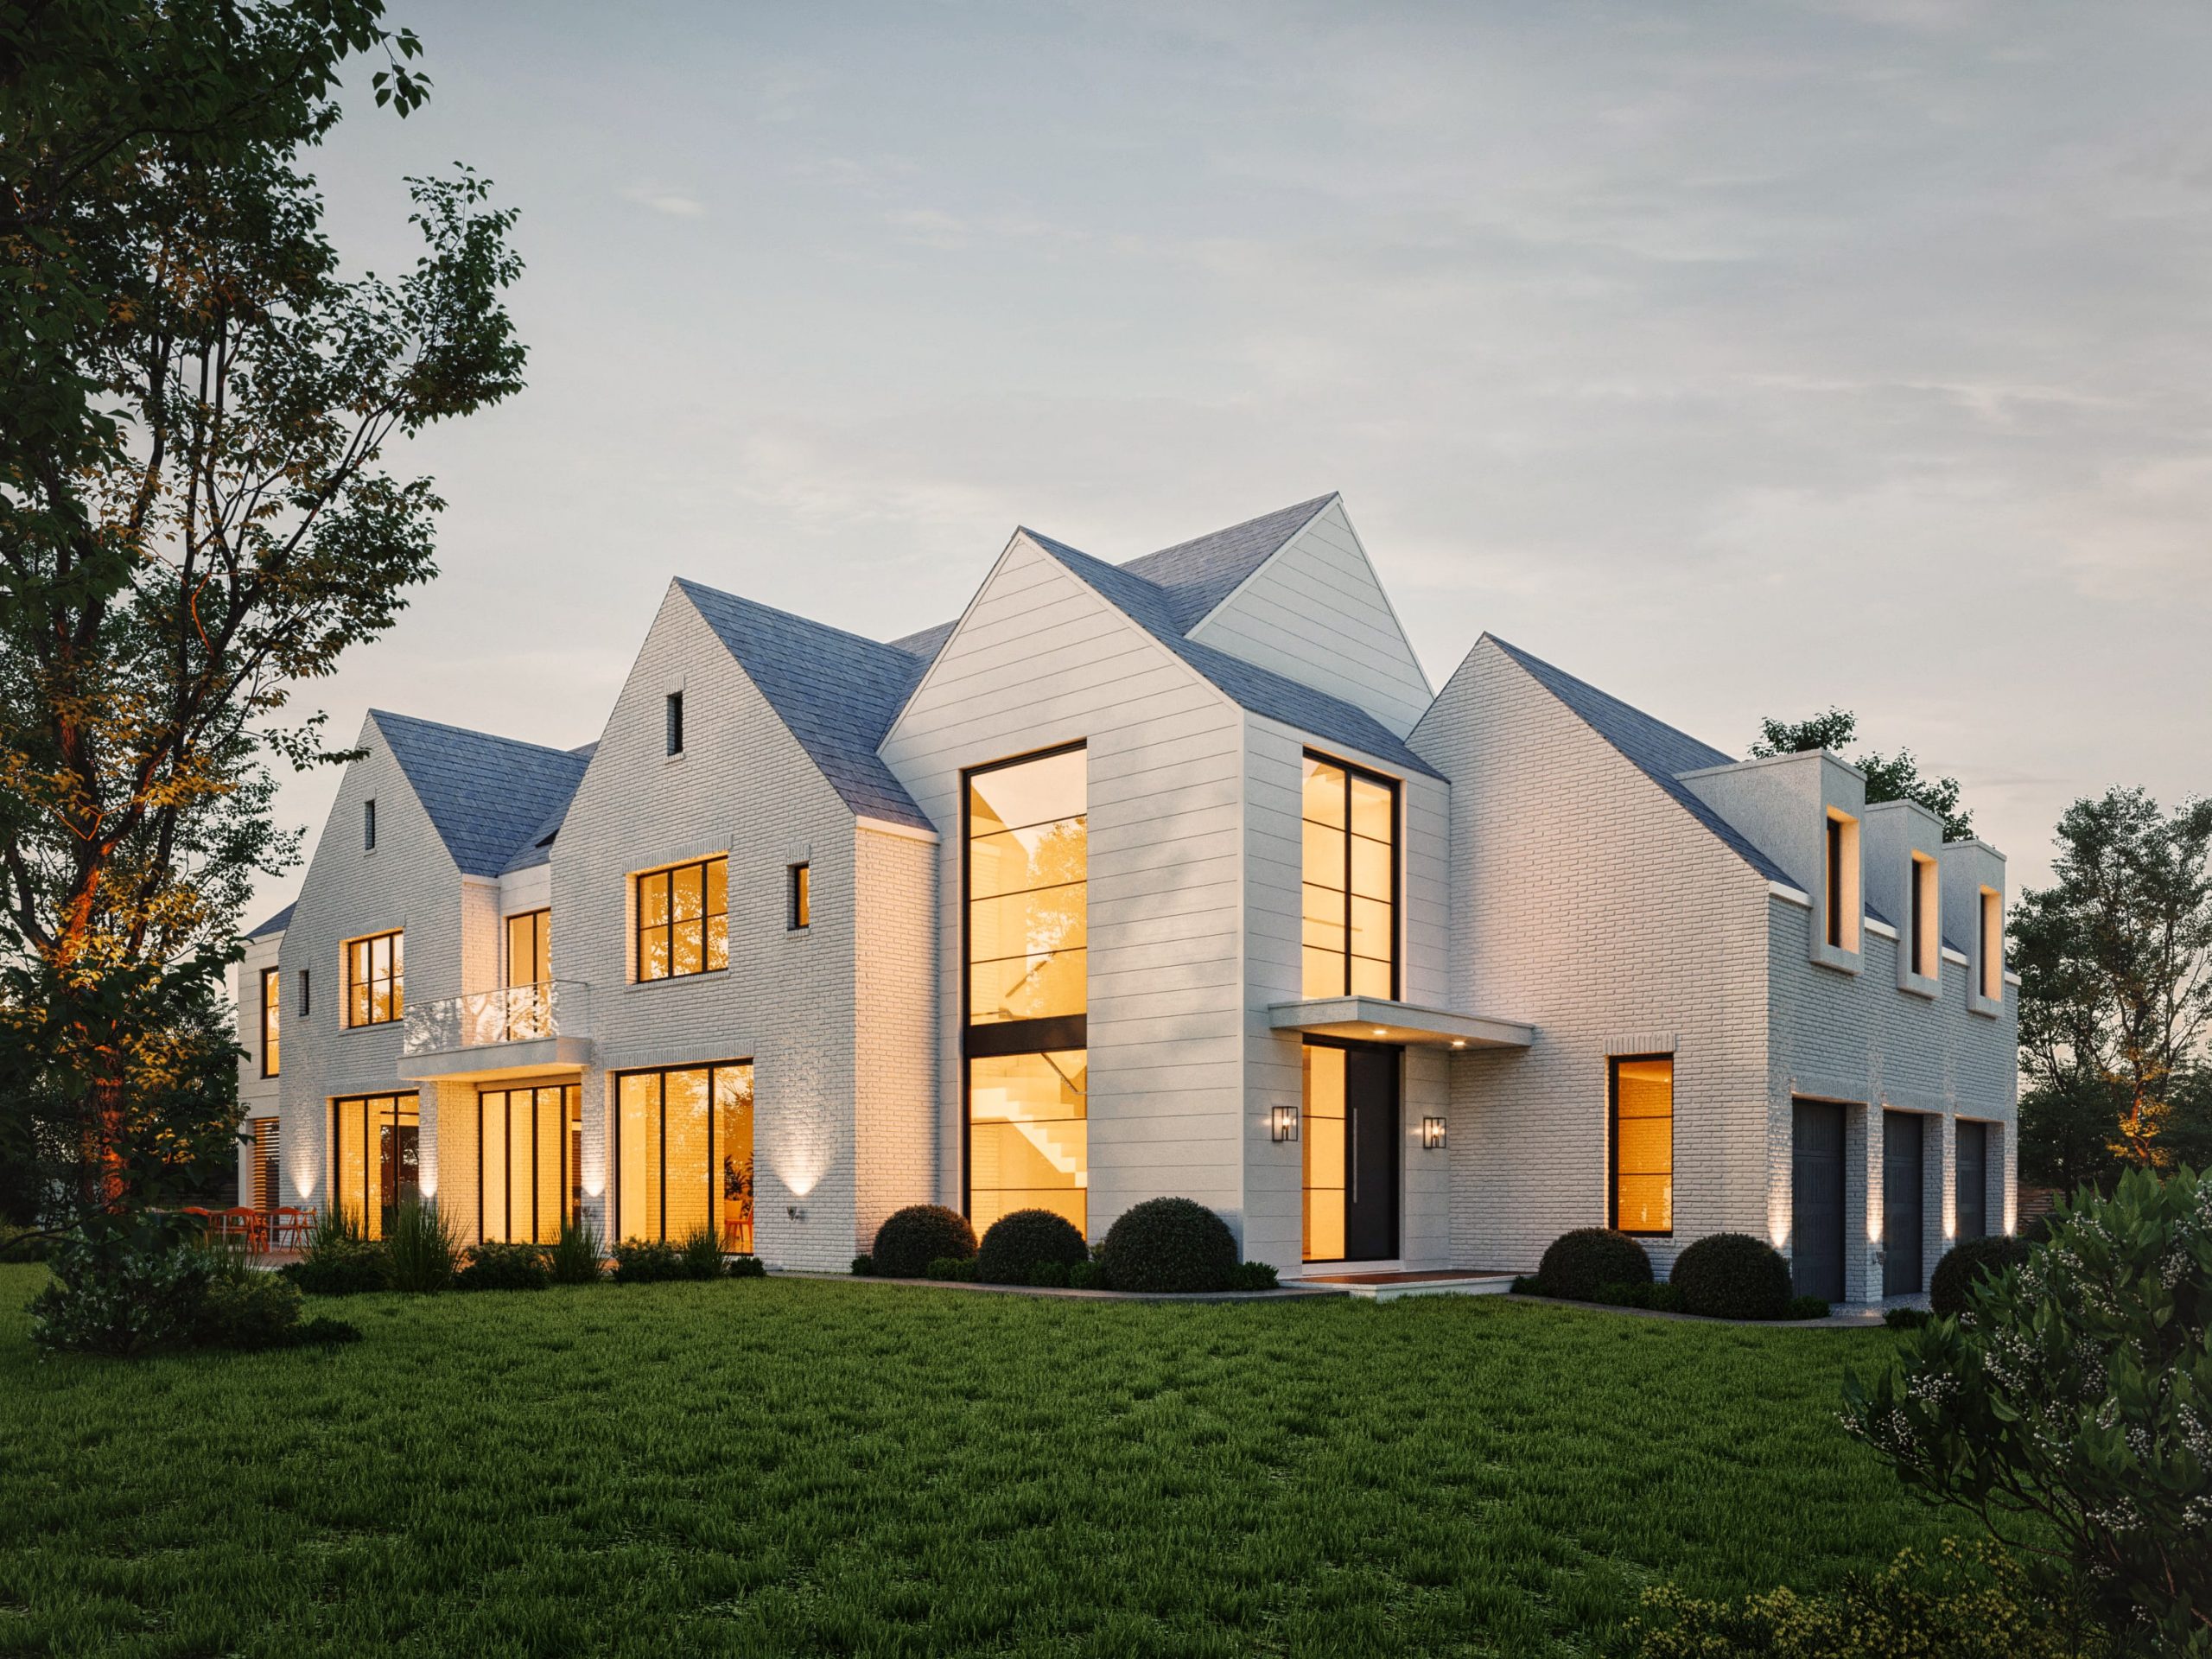 Exterior 3D Architectural Rendering (Darien, Fairfield County, Connecticut)